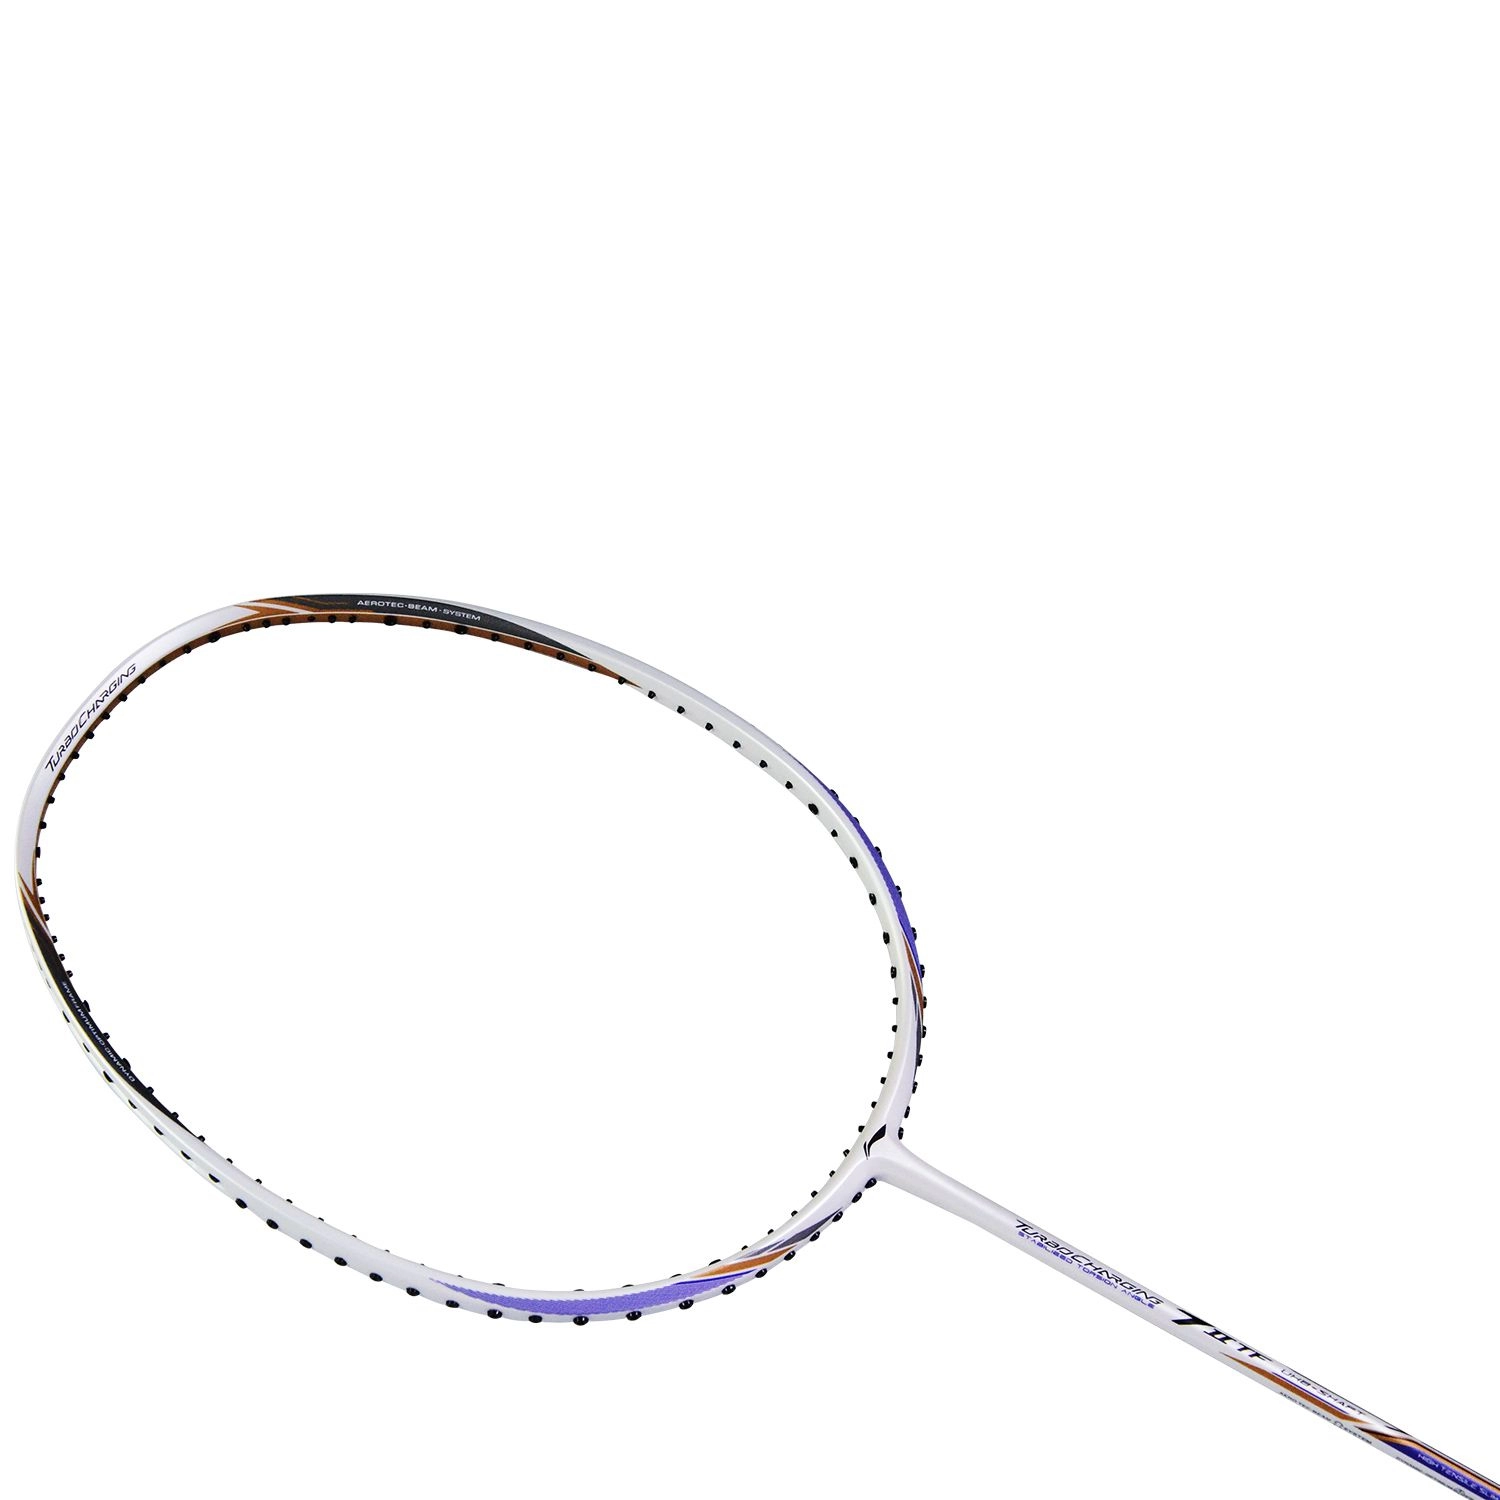 Li-Ning 2018 Turbo Charging 7II TF Lining Badminton Racket